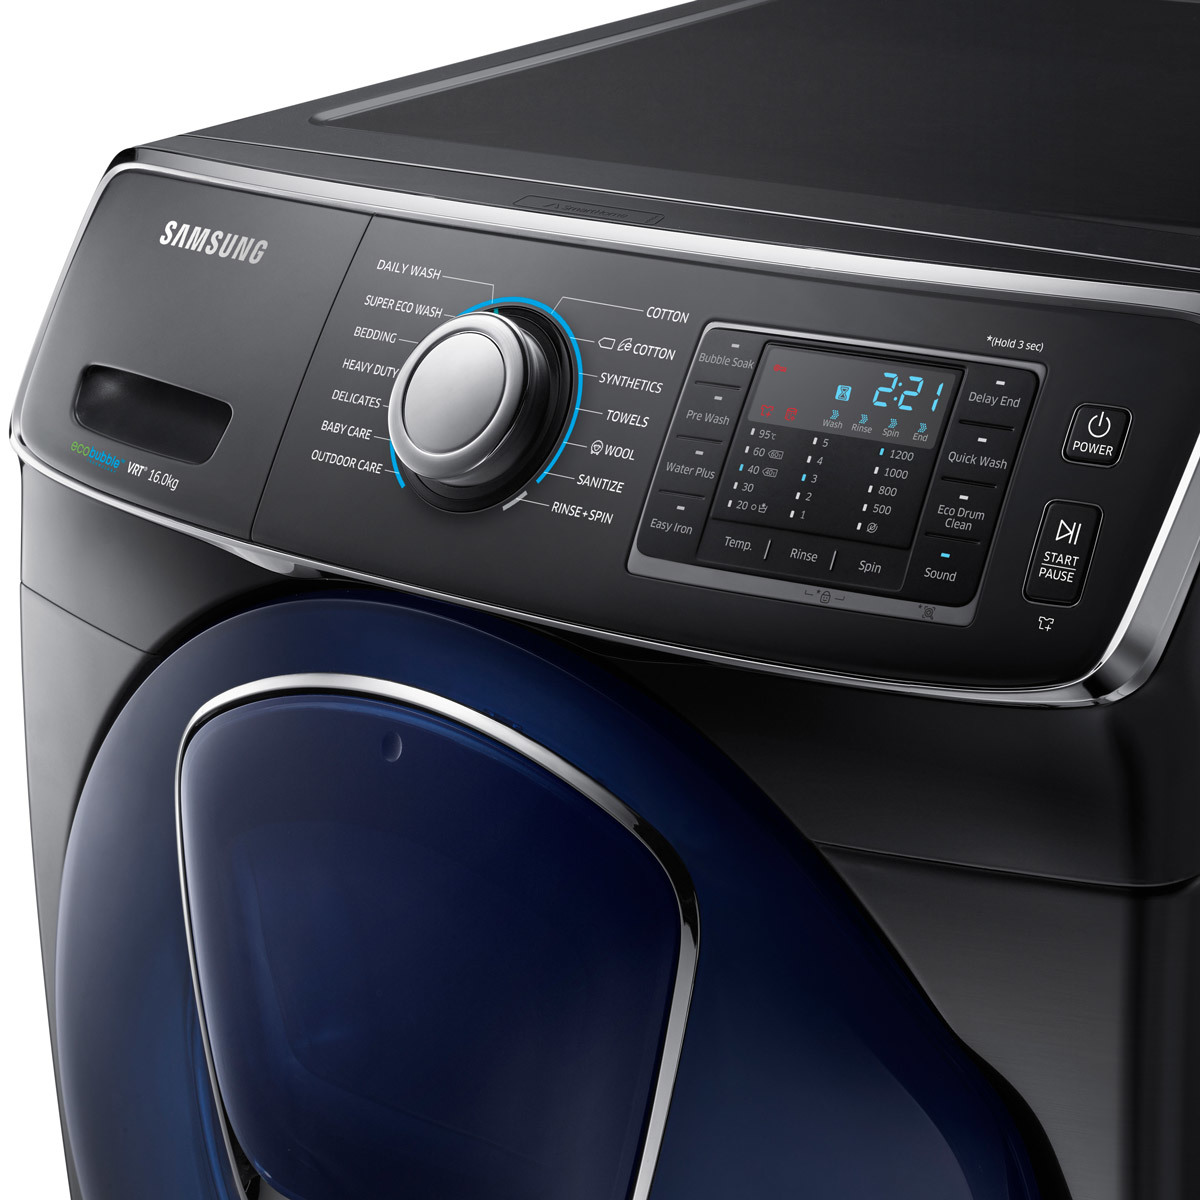 Samsung WF16J6500EV/EU, 16kg, 1200rpm Hardwired AddWash Washing Machine A++ Rated in Black